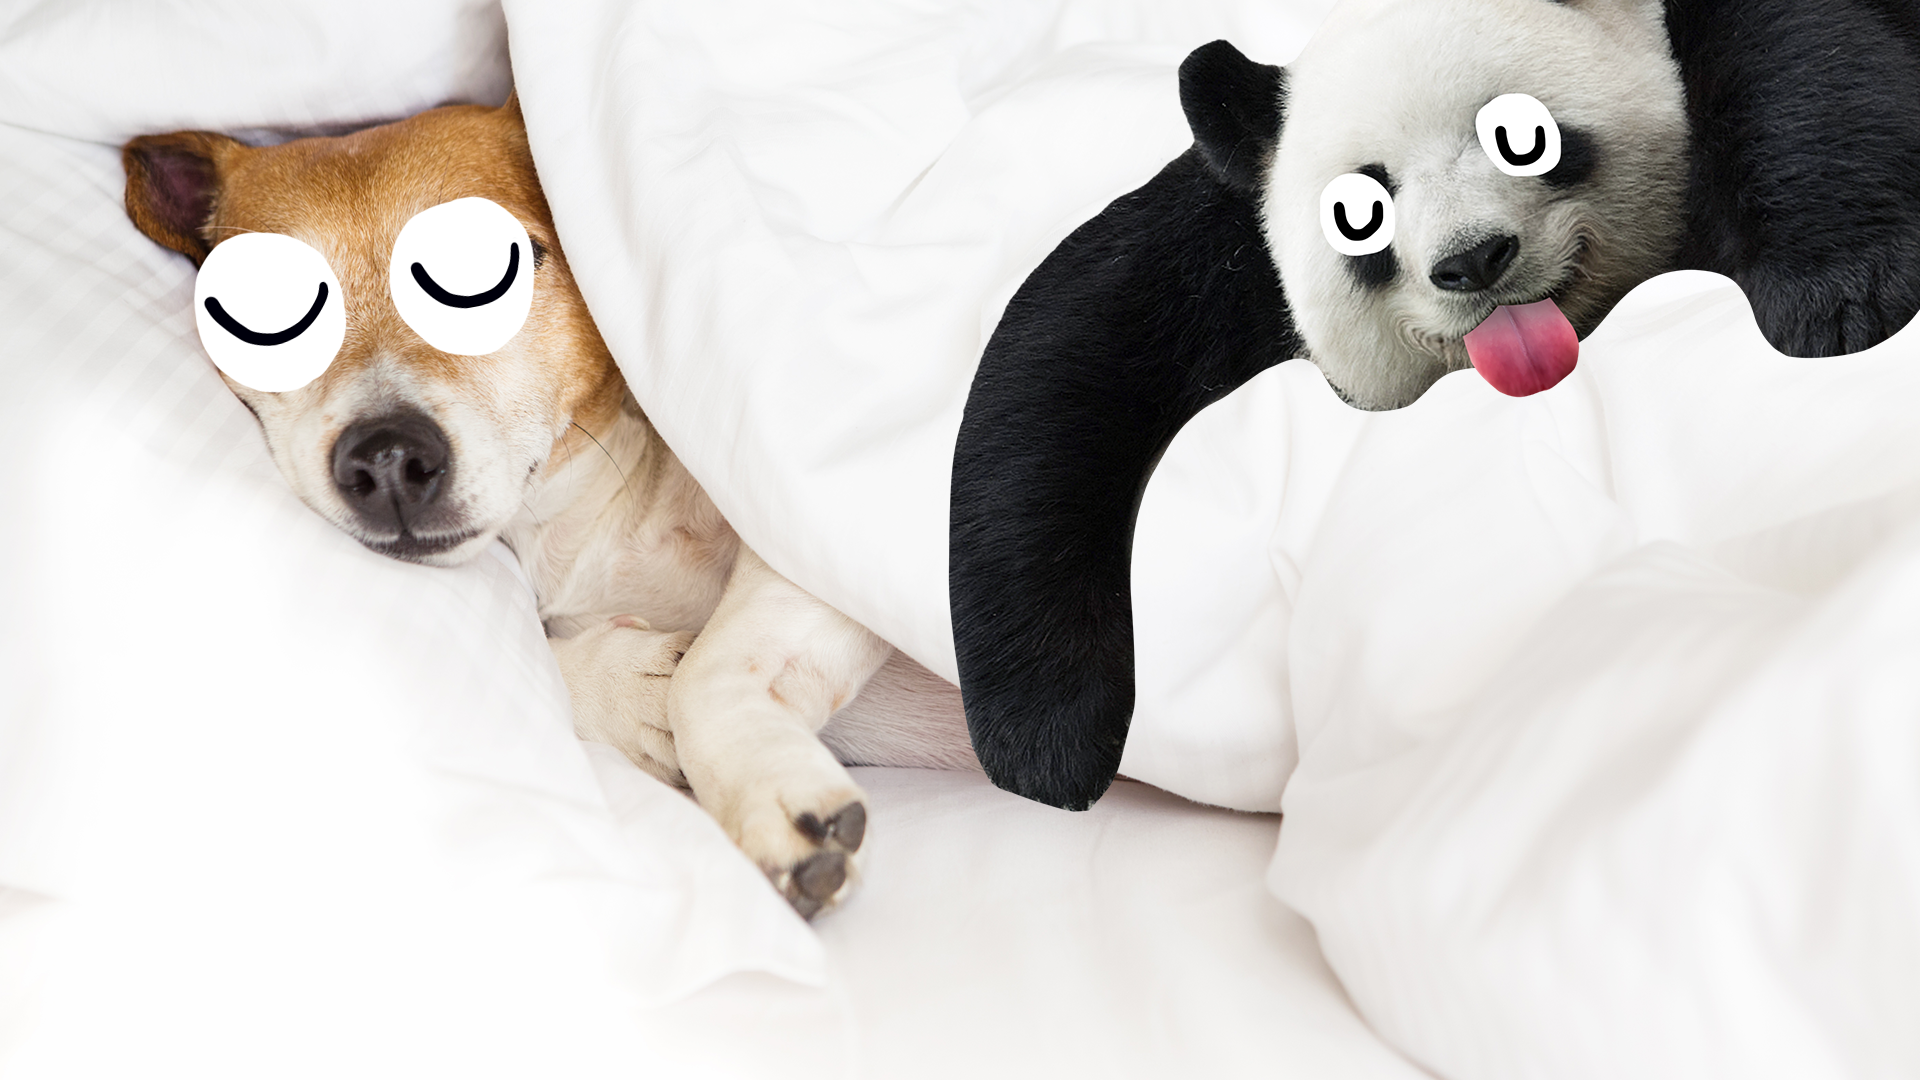 Dog sleeping and derpy panda 